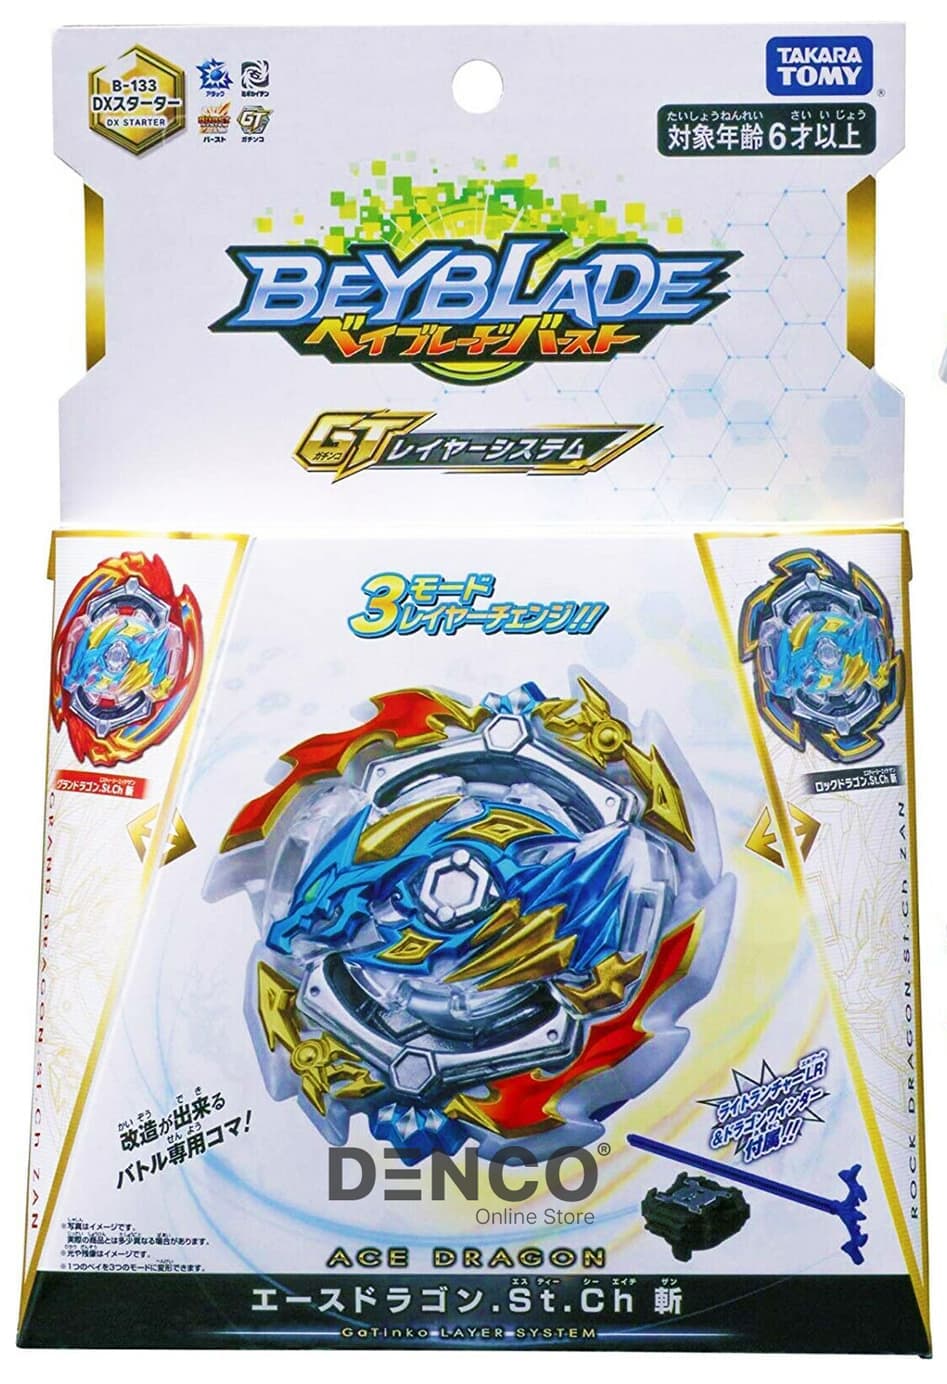 Волчок BEYBLADE Burst Ace Dragon (Эйс Драгон) B-133 от Takara Tomy с Запускателем